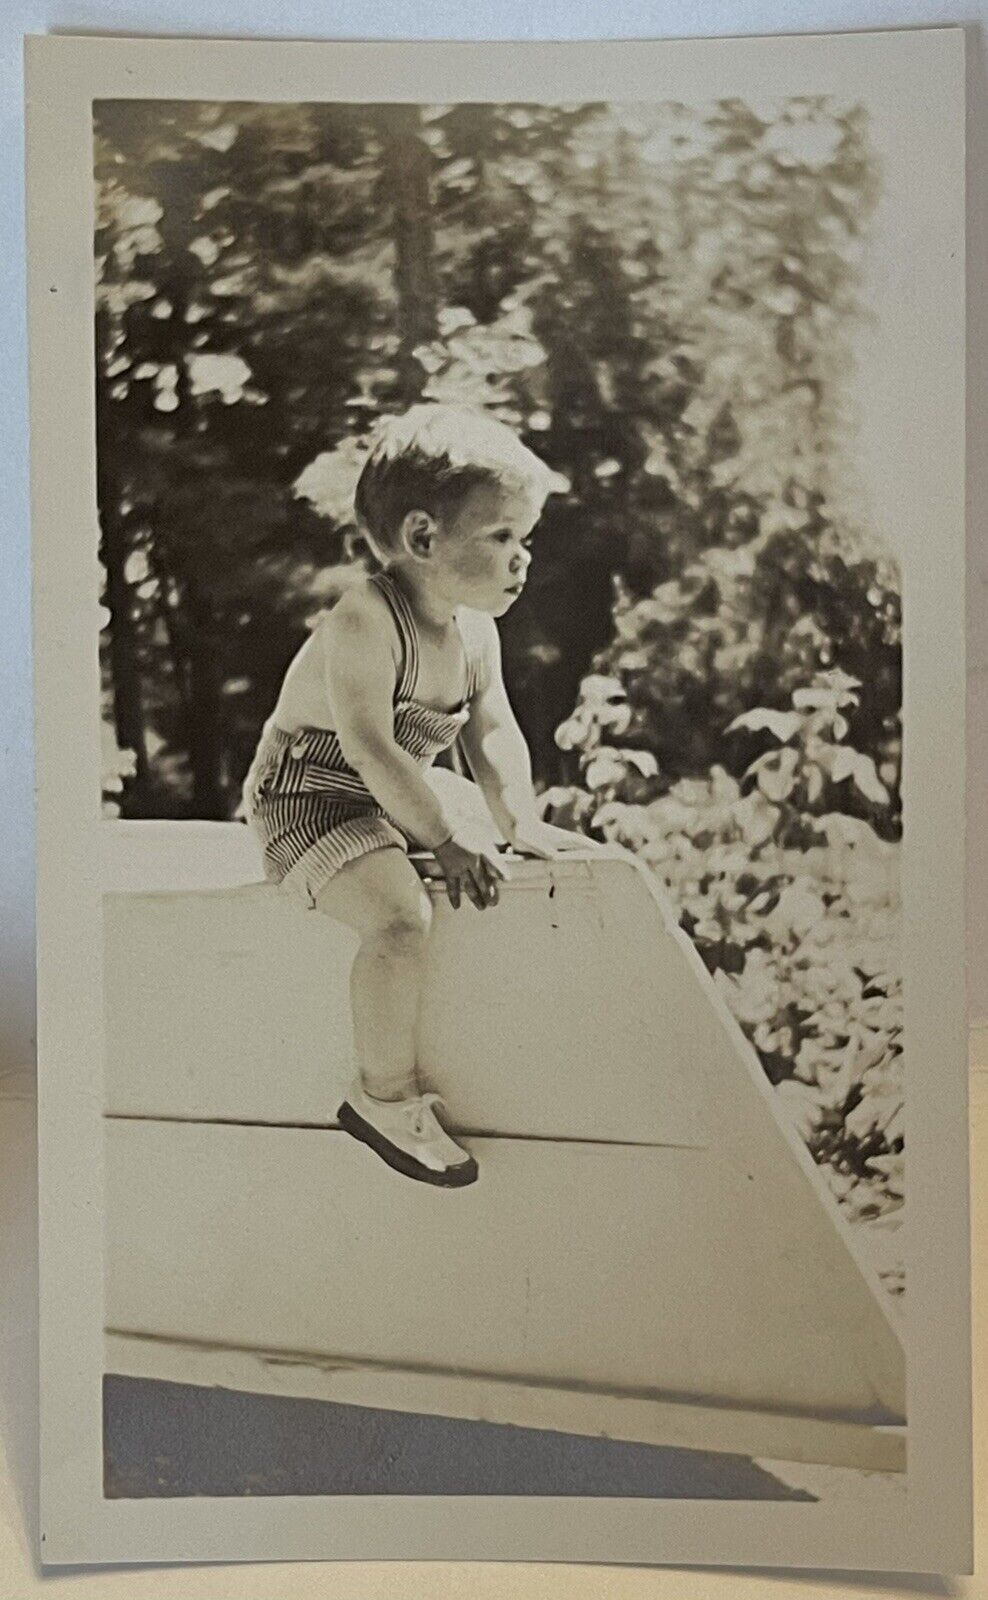 Vintage Photograph Black White Snapshot Young Boy Child Sitting Identified